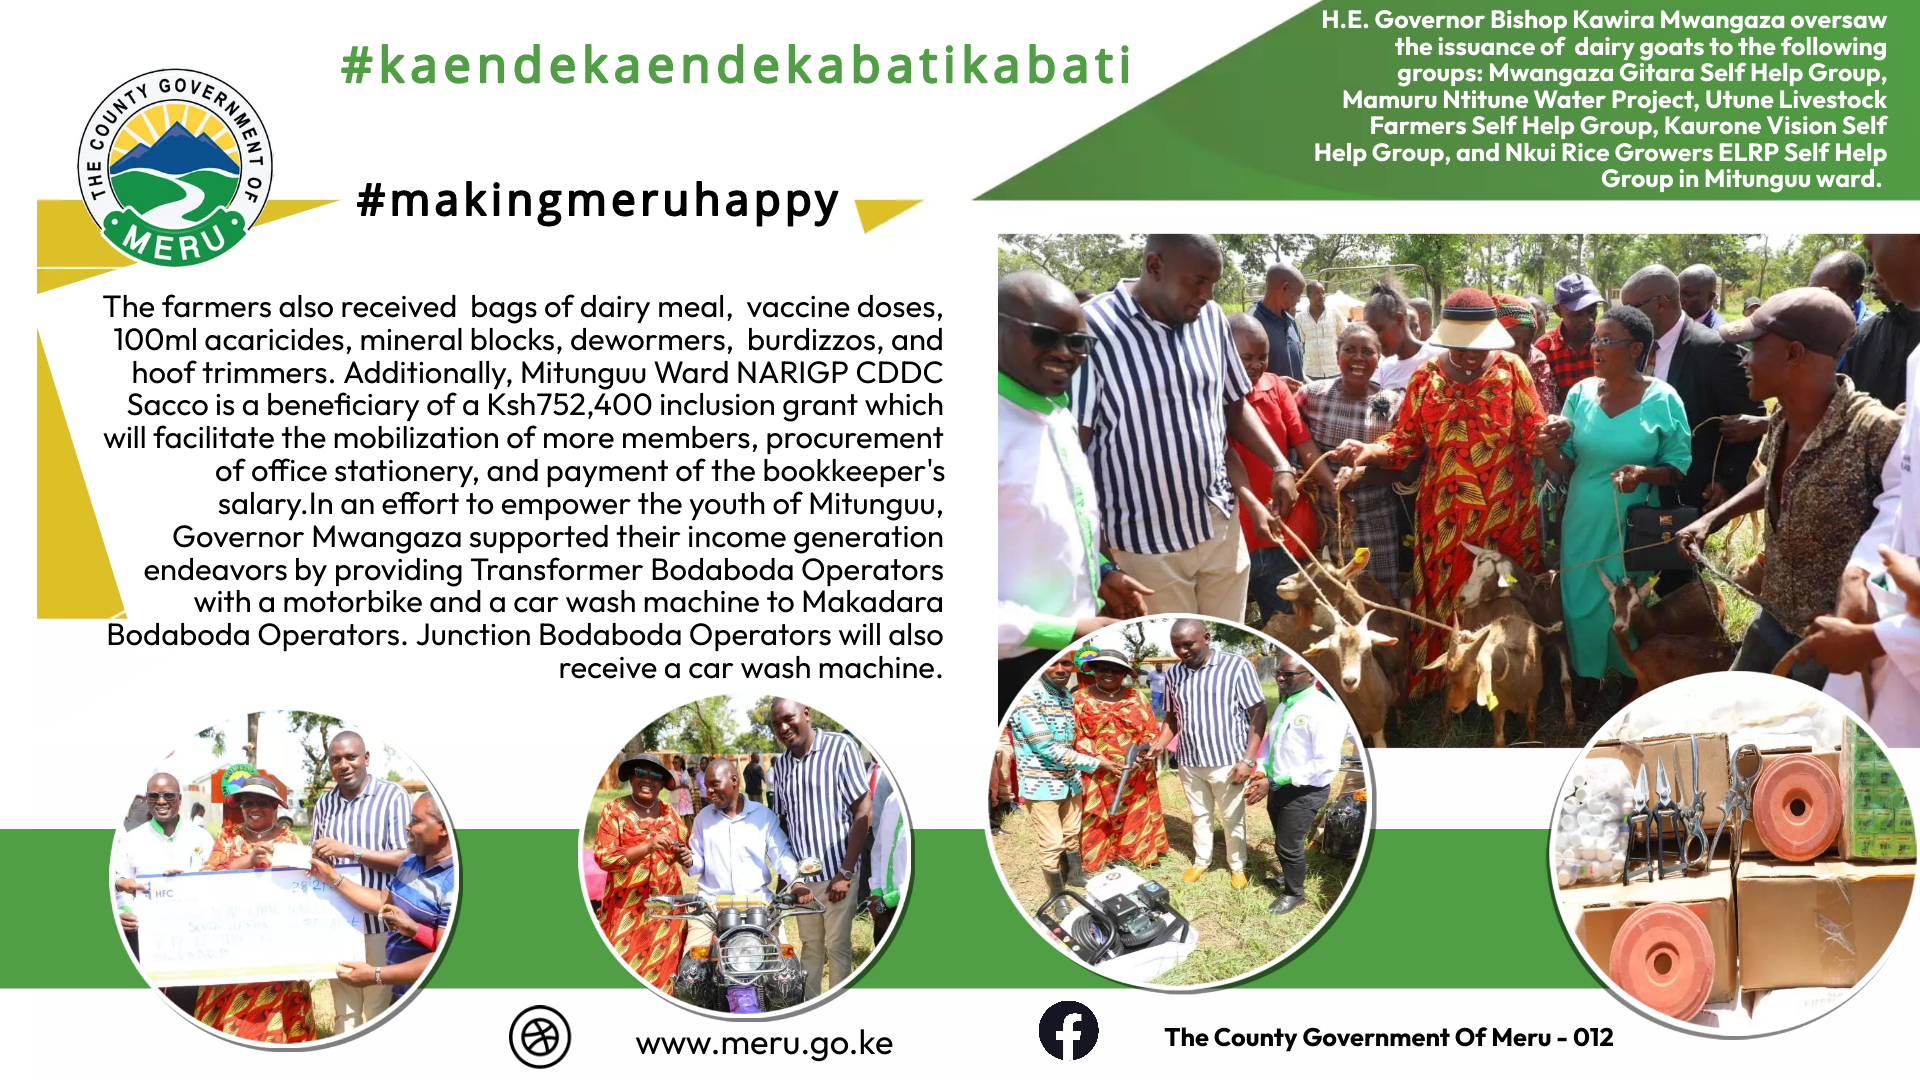 H.E Governor Bishop Kawira Mwangaza's Impactful Leadership: Issuance of Dairy Goats to Target Groups in Mitunguu Ward